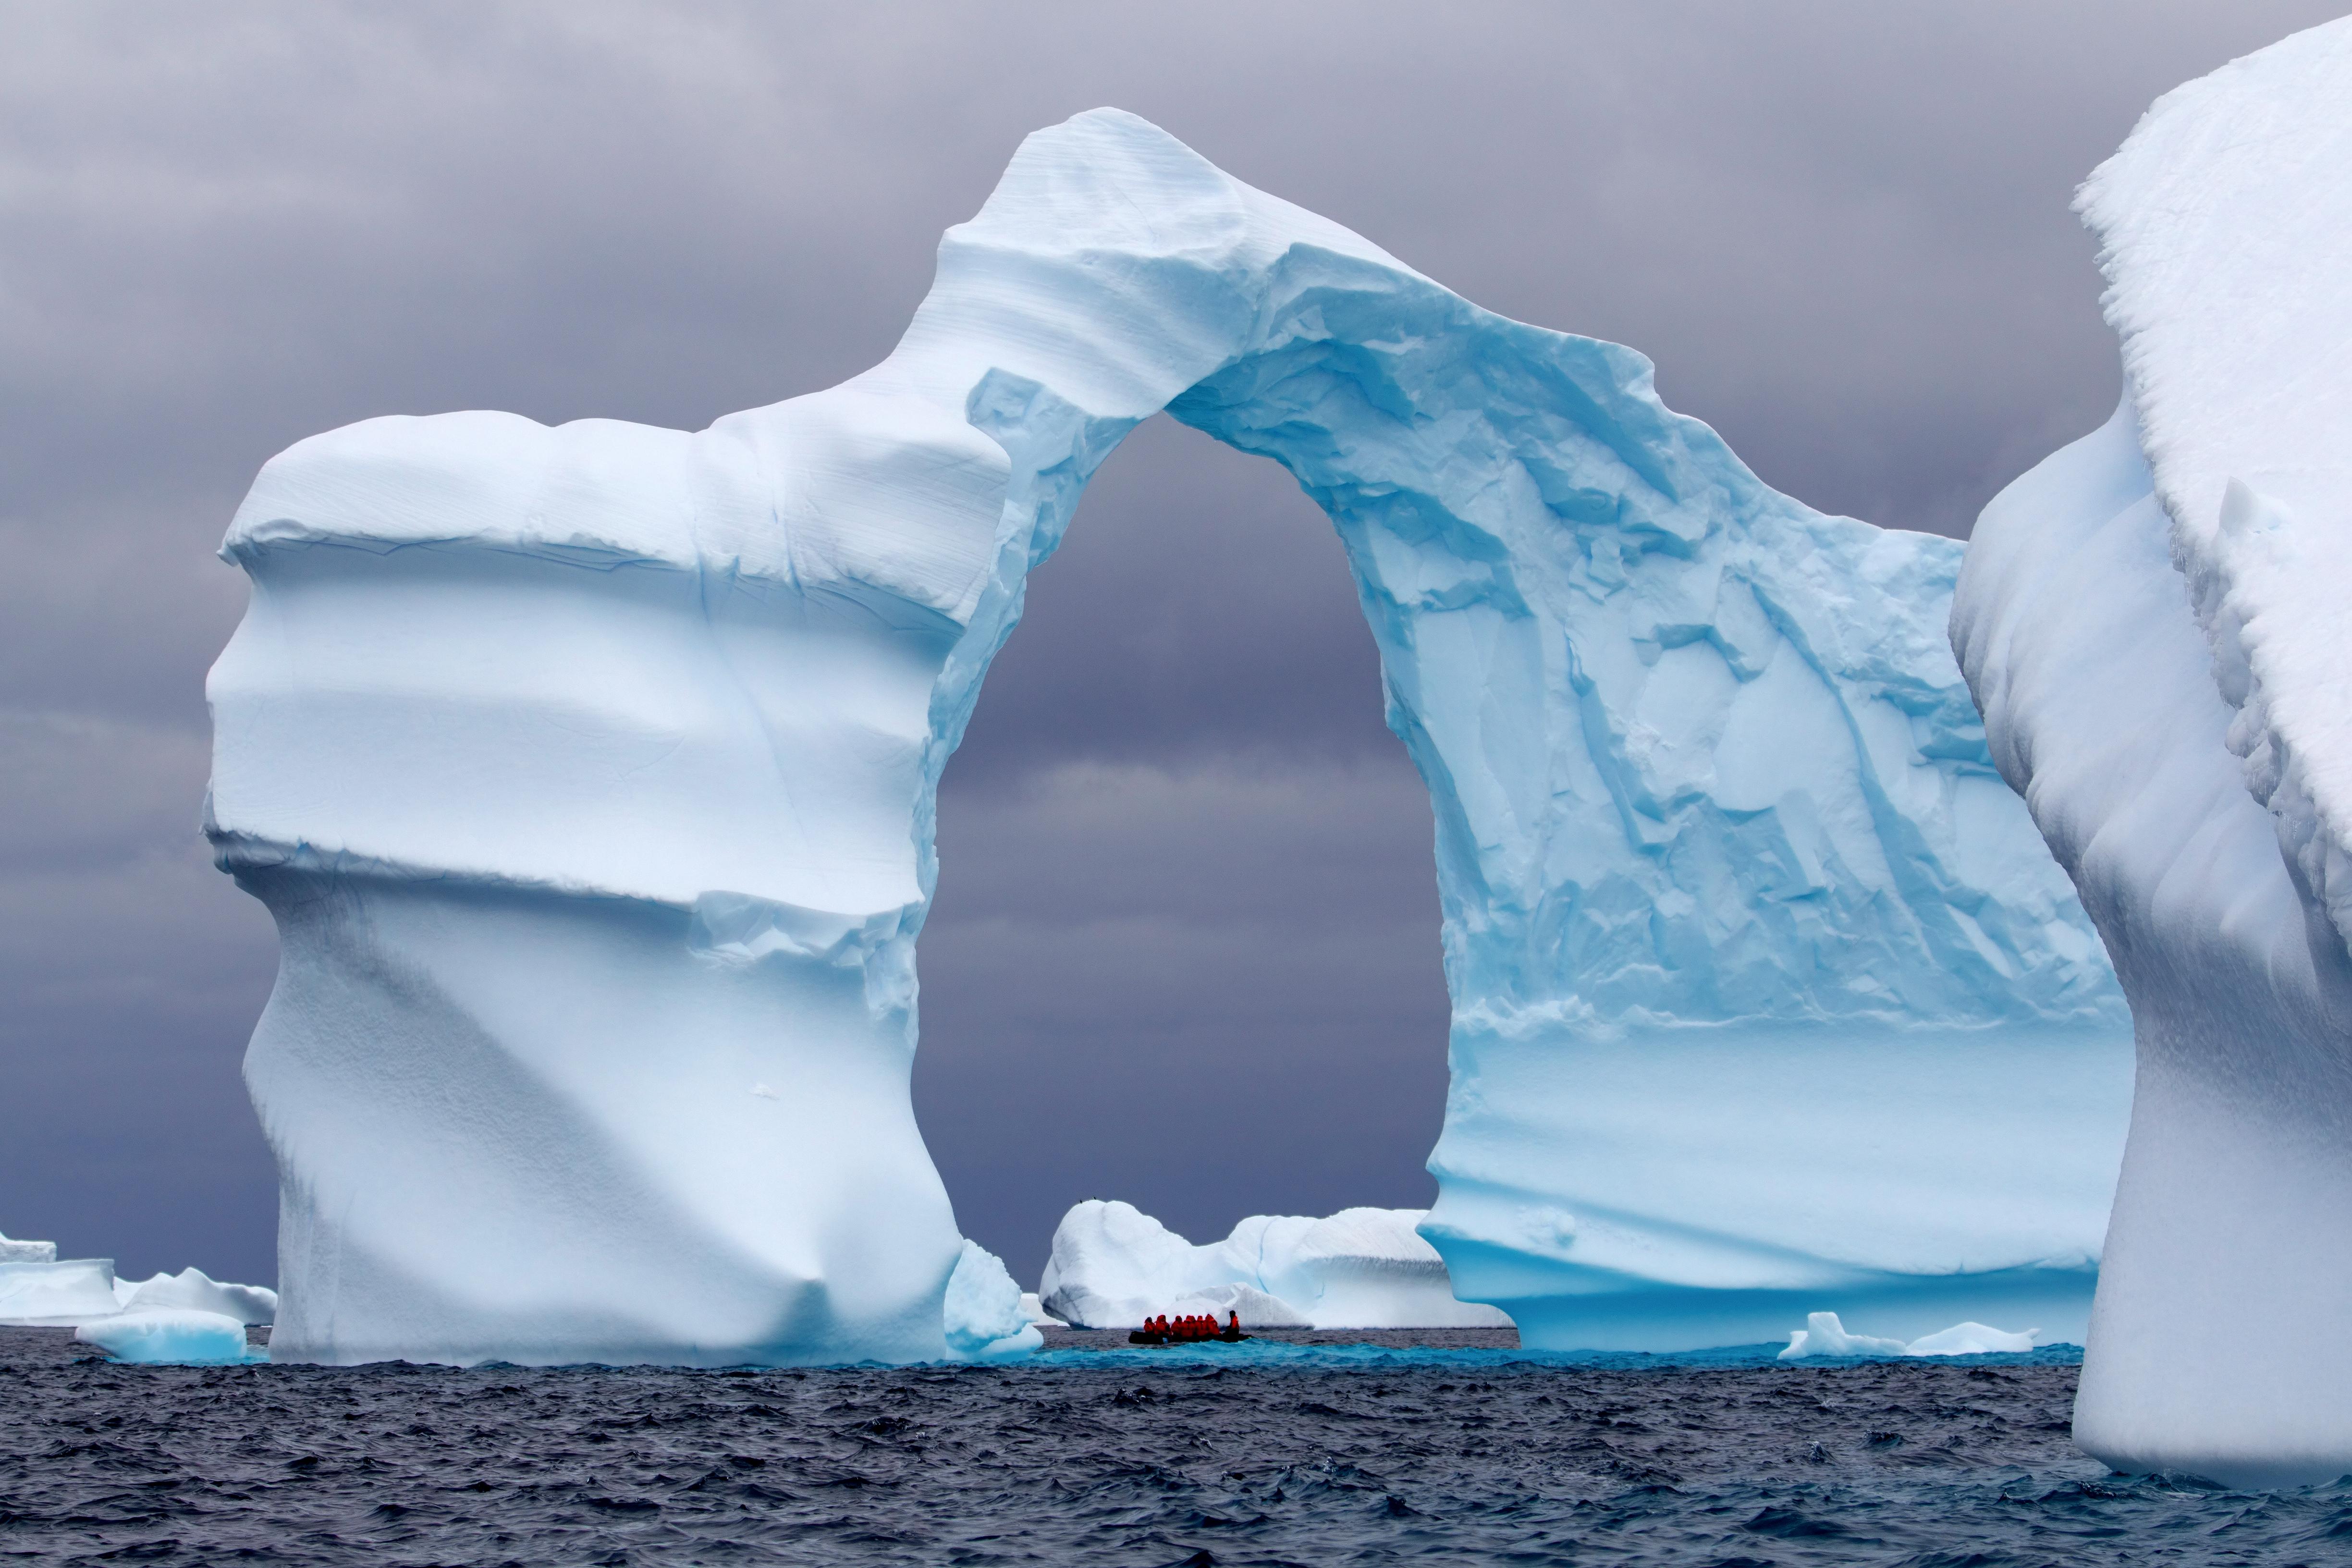 Антарктическое государство. Айсберги Антарктиды. Льды и айсберги в Антарктиде. Пирамидальные айсберги. Столообразные айсберги.